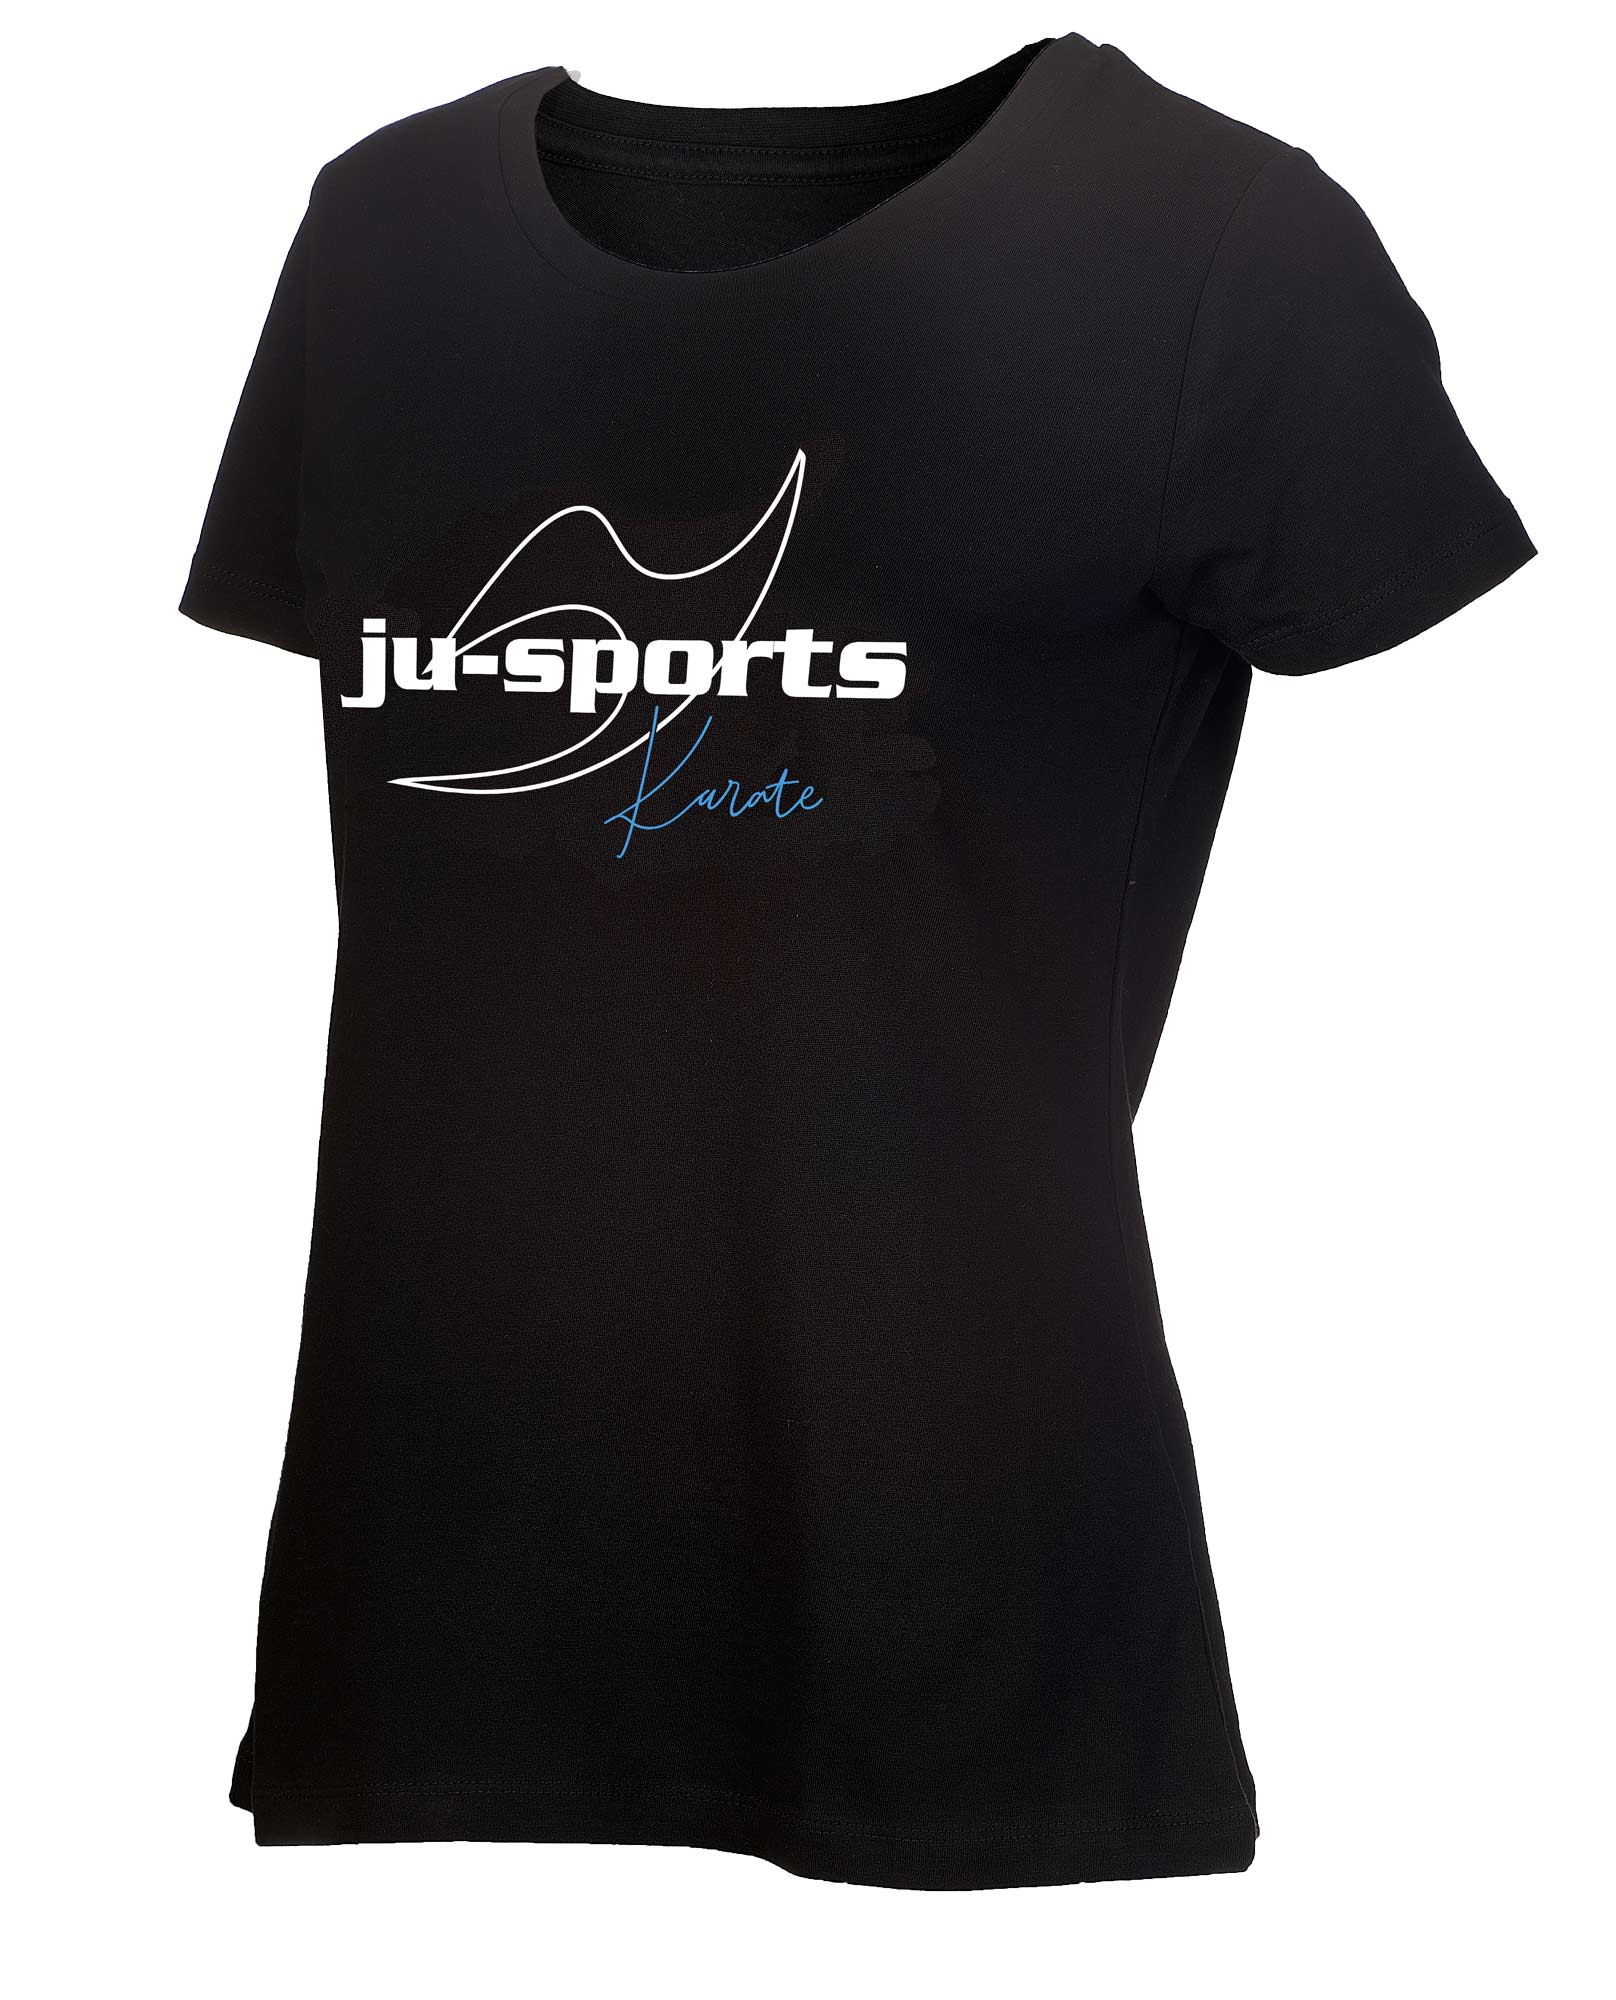 Ju-Sports Signature Line "Karate" T-Shirt ladycut